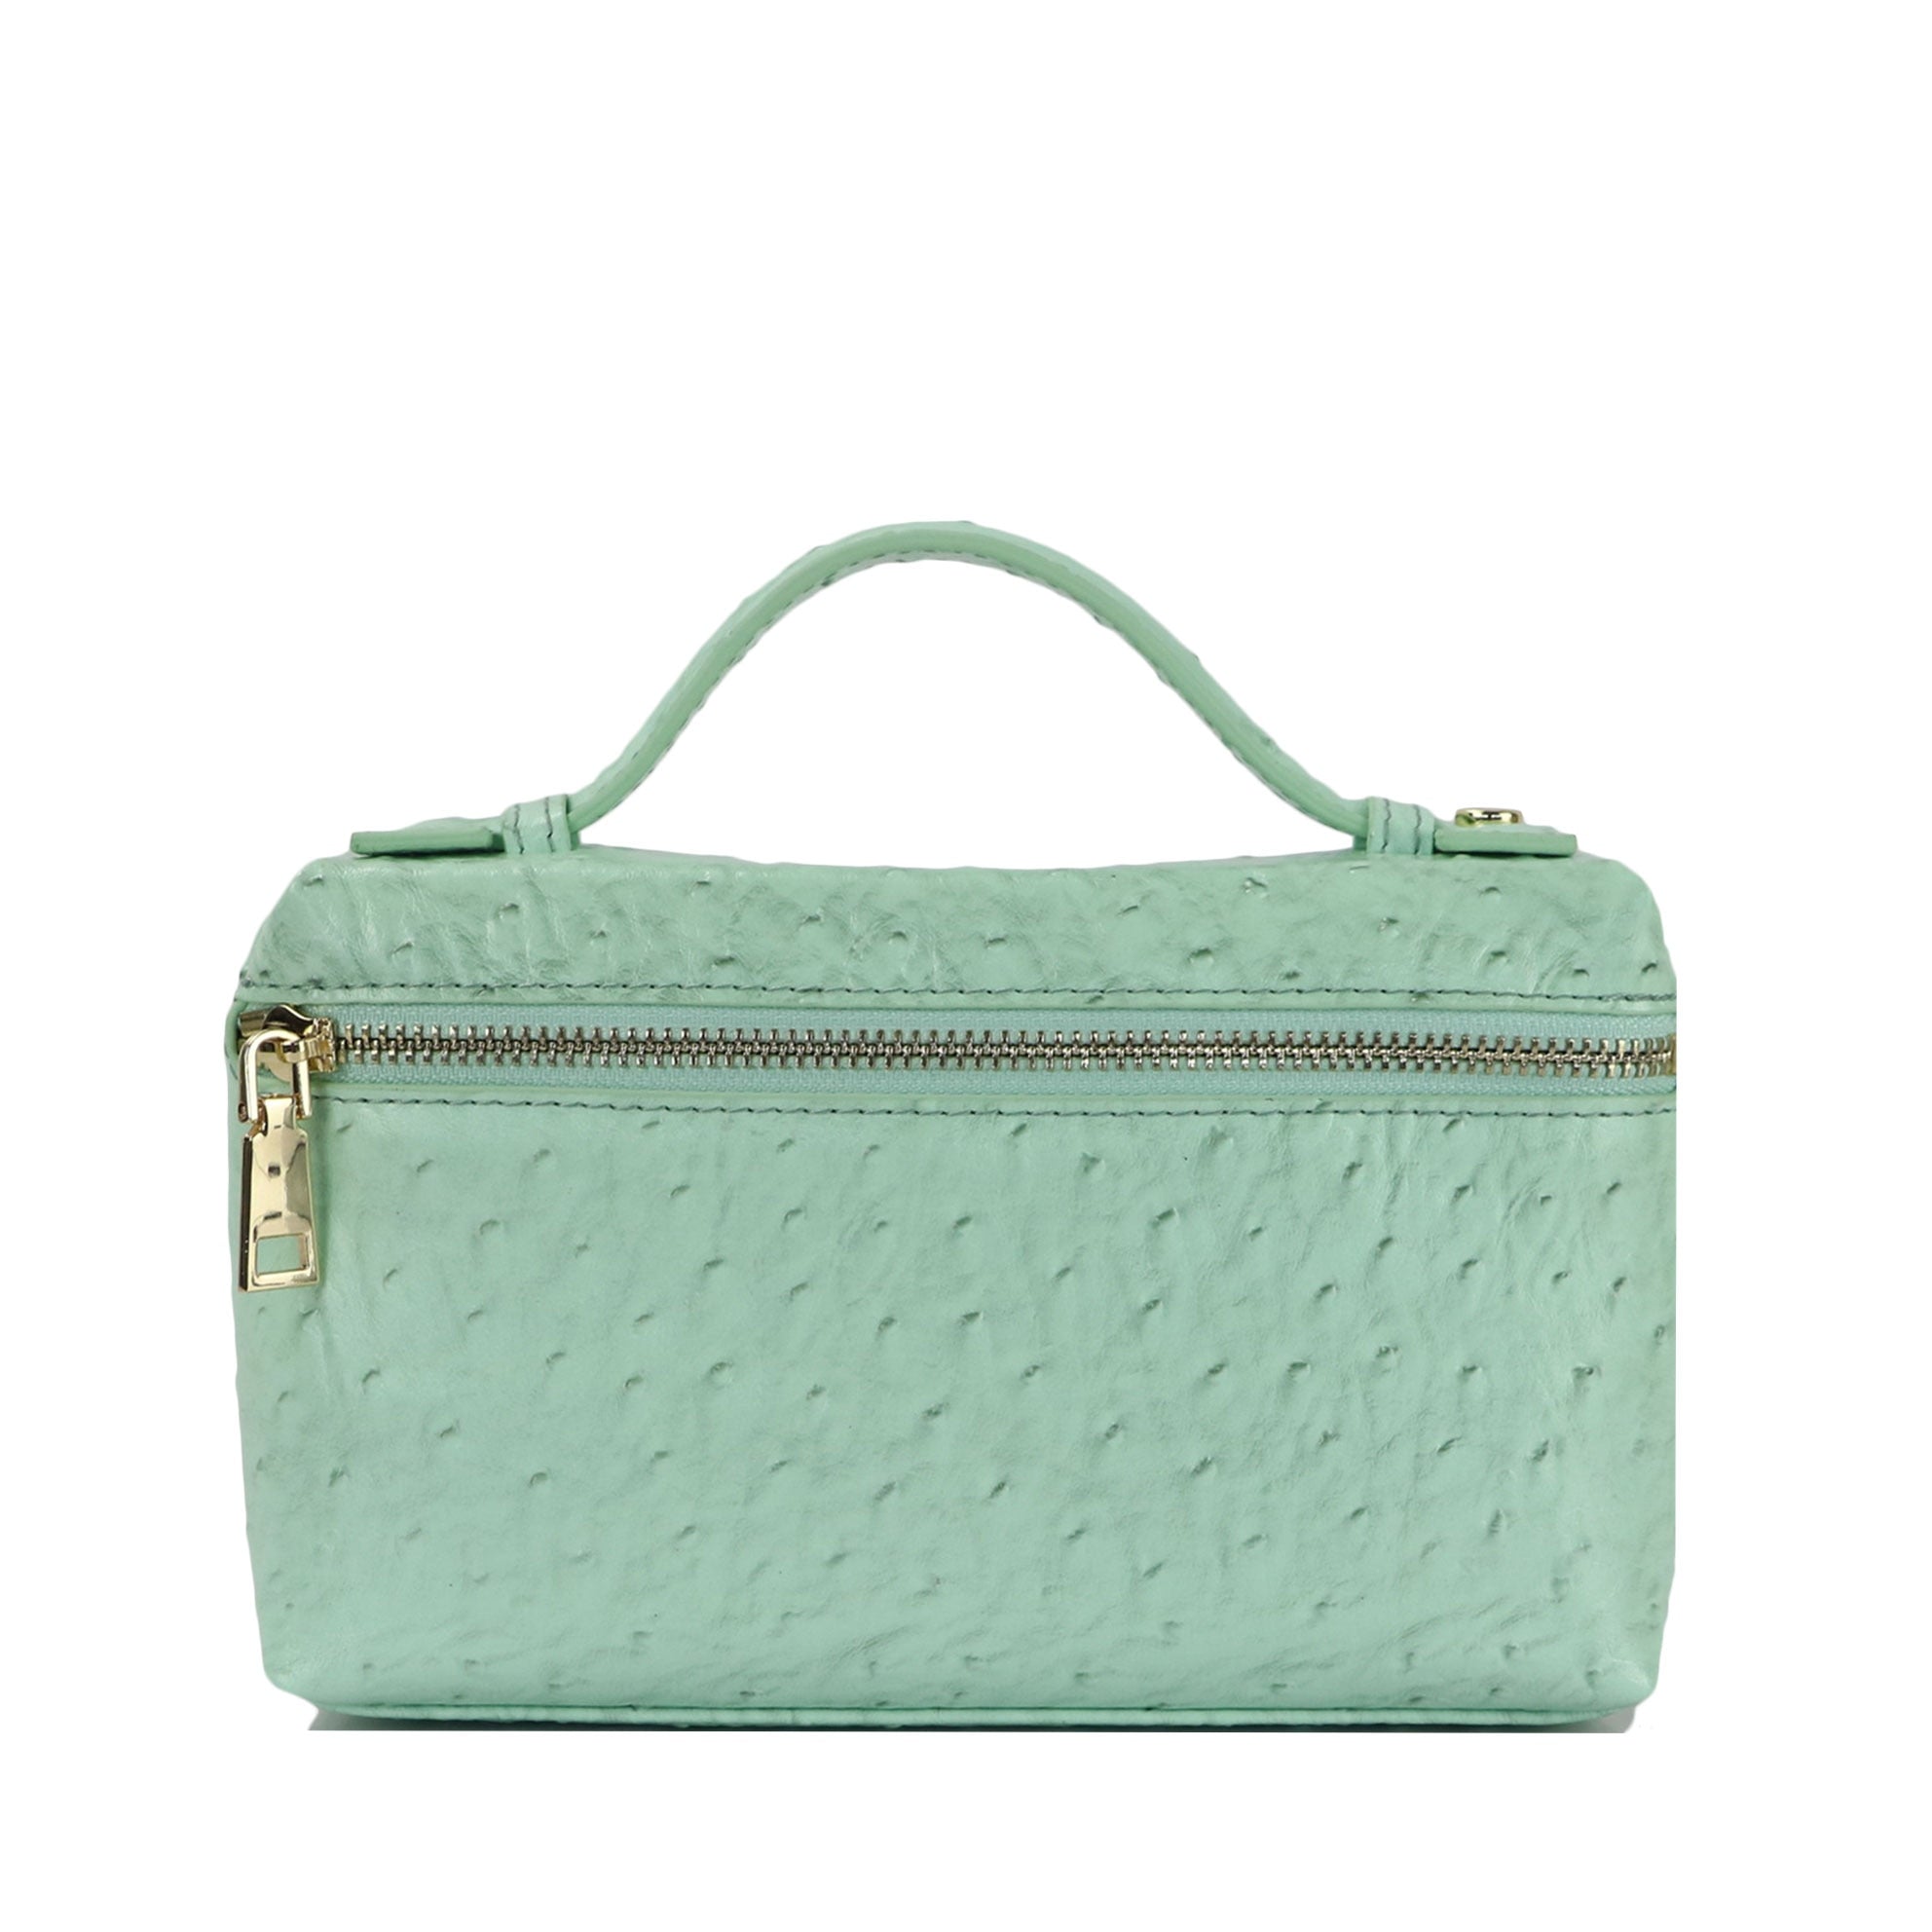 Kylethomasw New Fashion designer handbag embossed ostrich leather portable bag small clutch bag lady hand bag purse